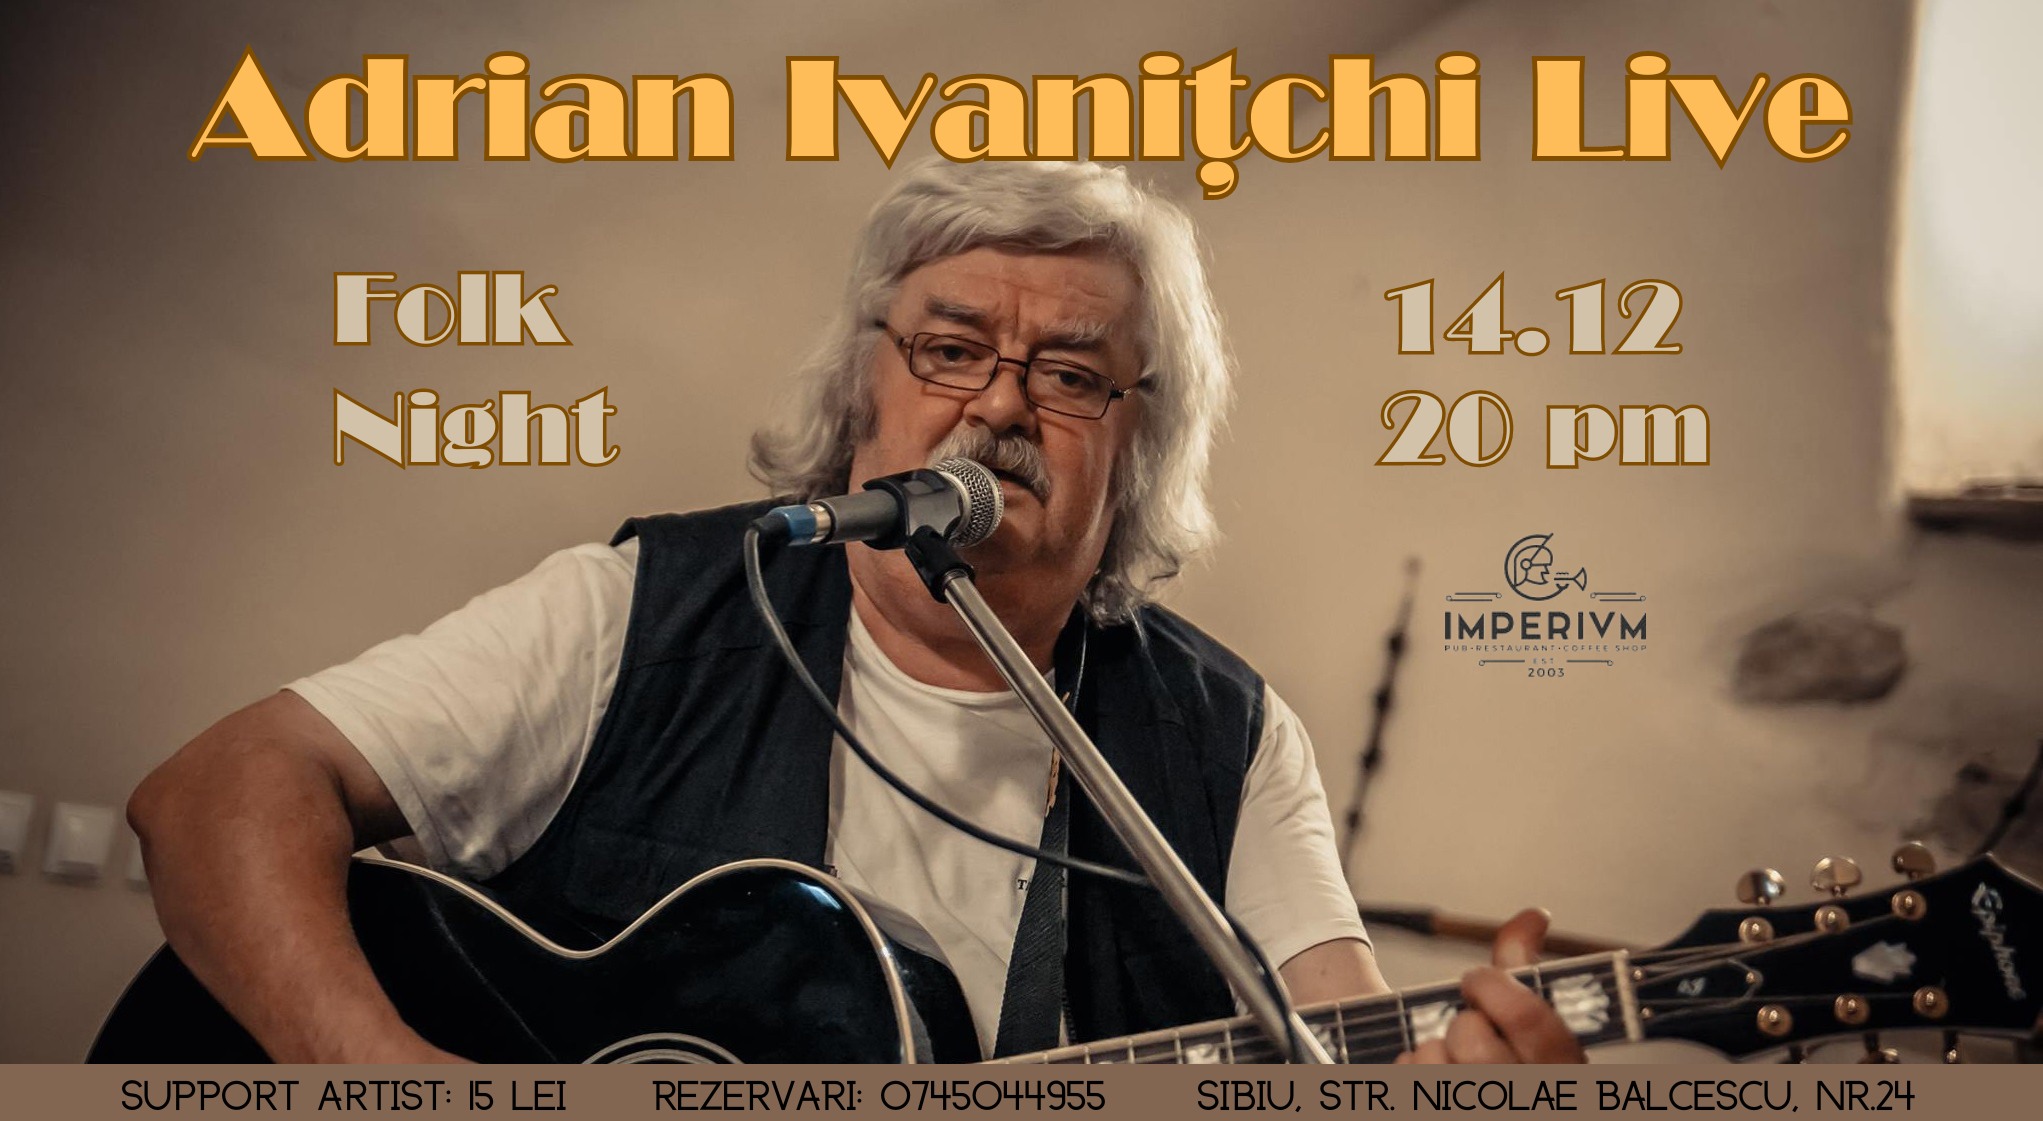 Adrian Ivanițchi Live - Folk Night